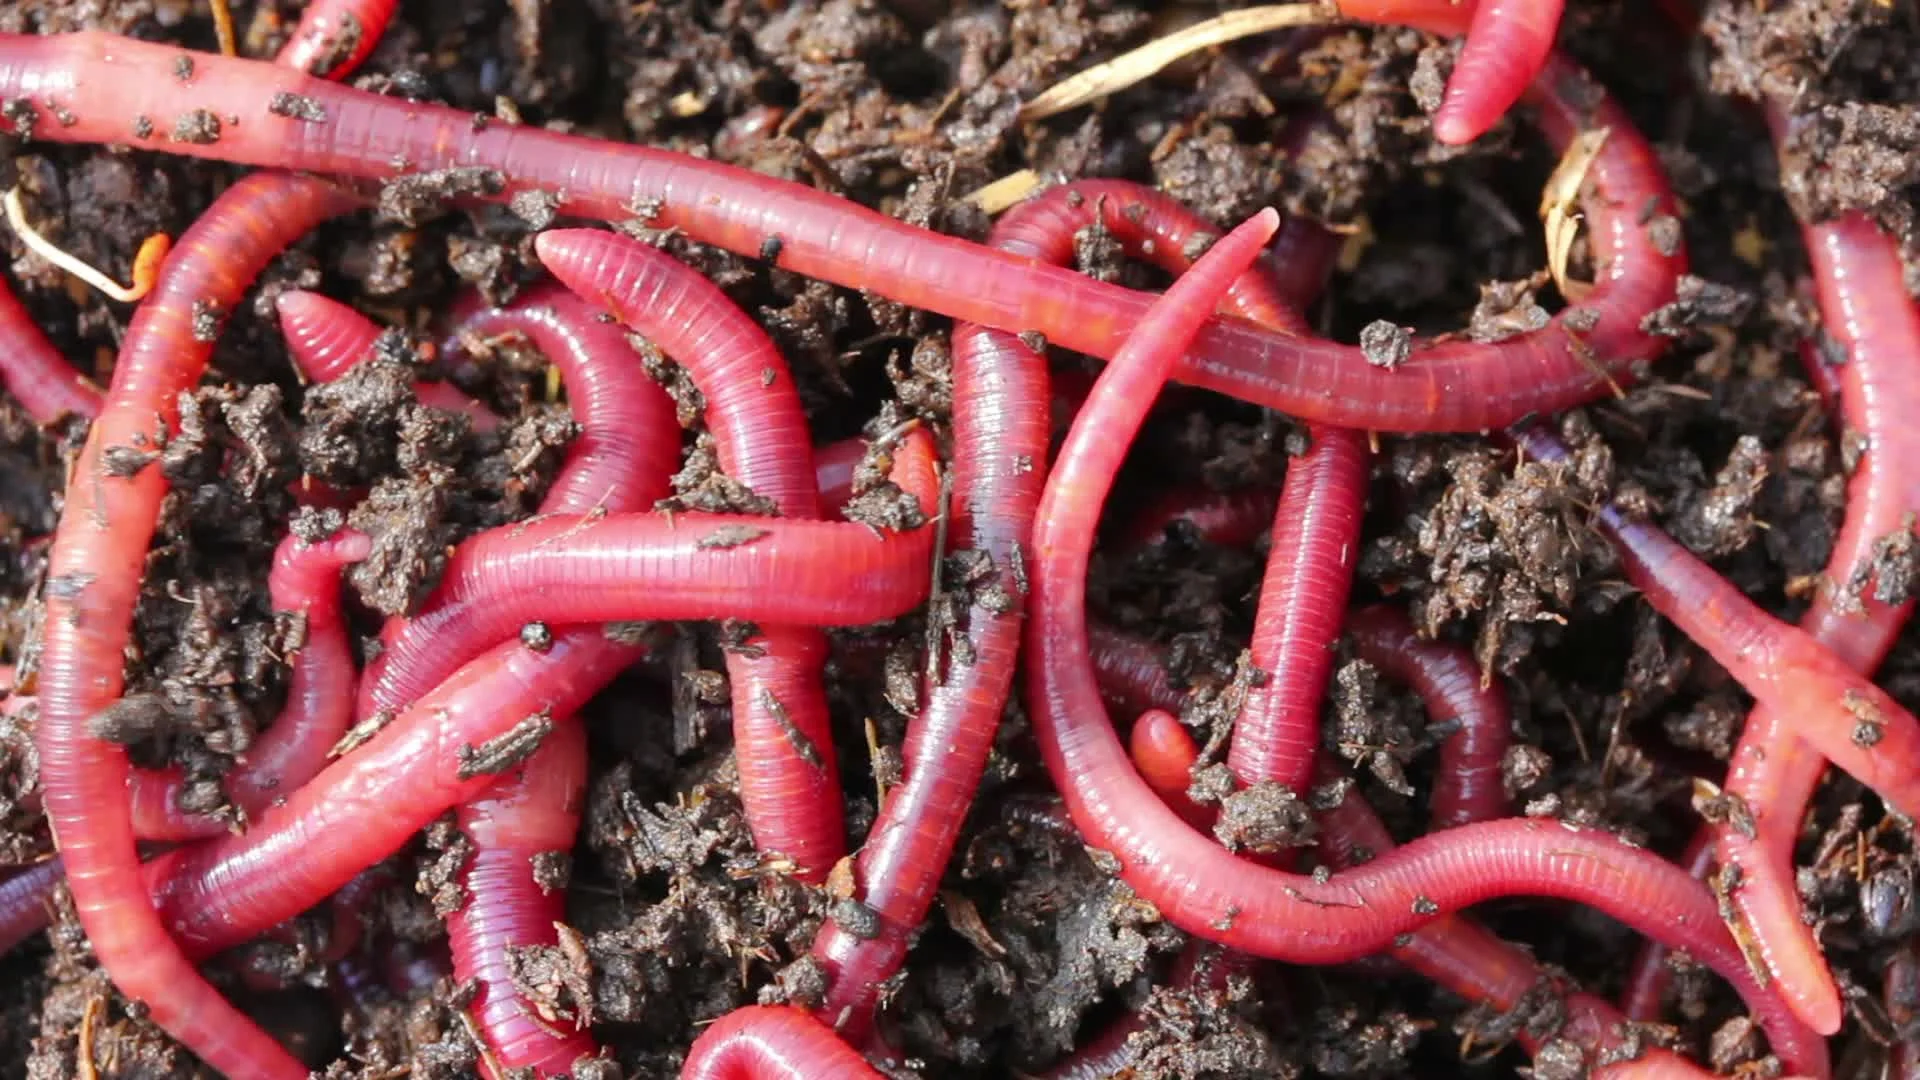 https://images.pond5.com/many-red-worms-dirt-bait-012082493_prevstill.jpeg